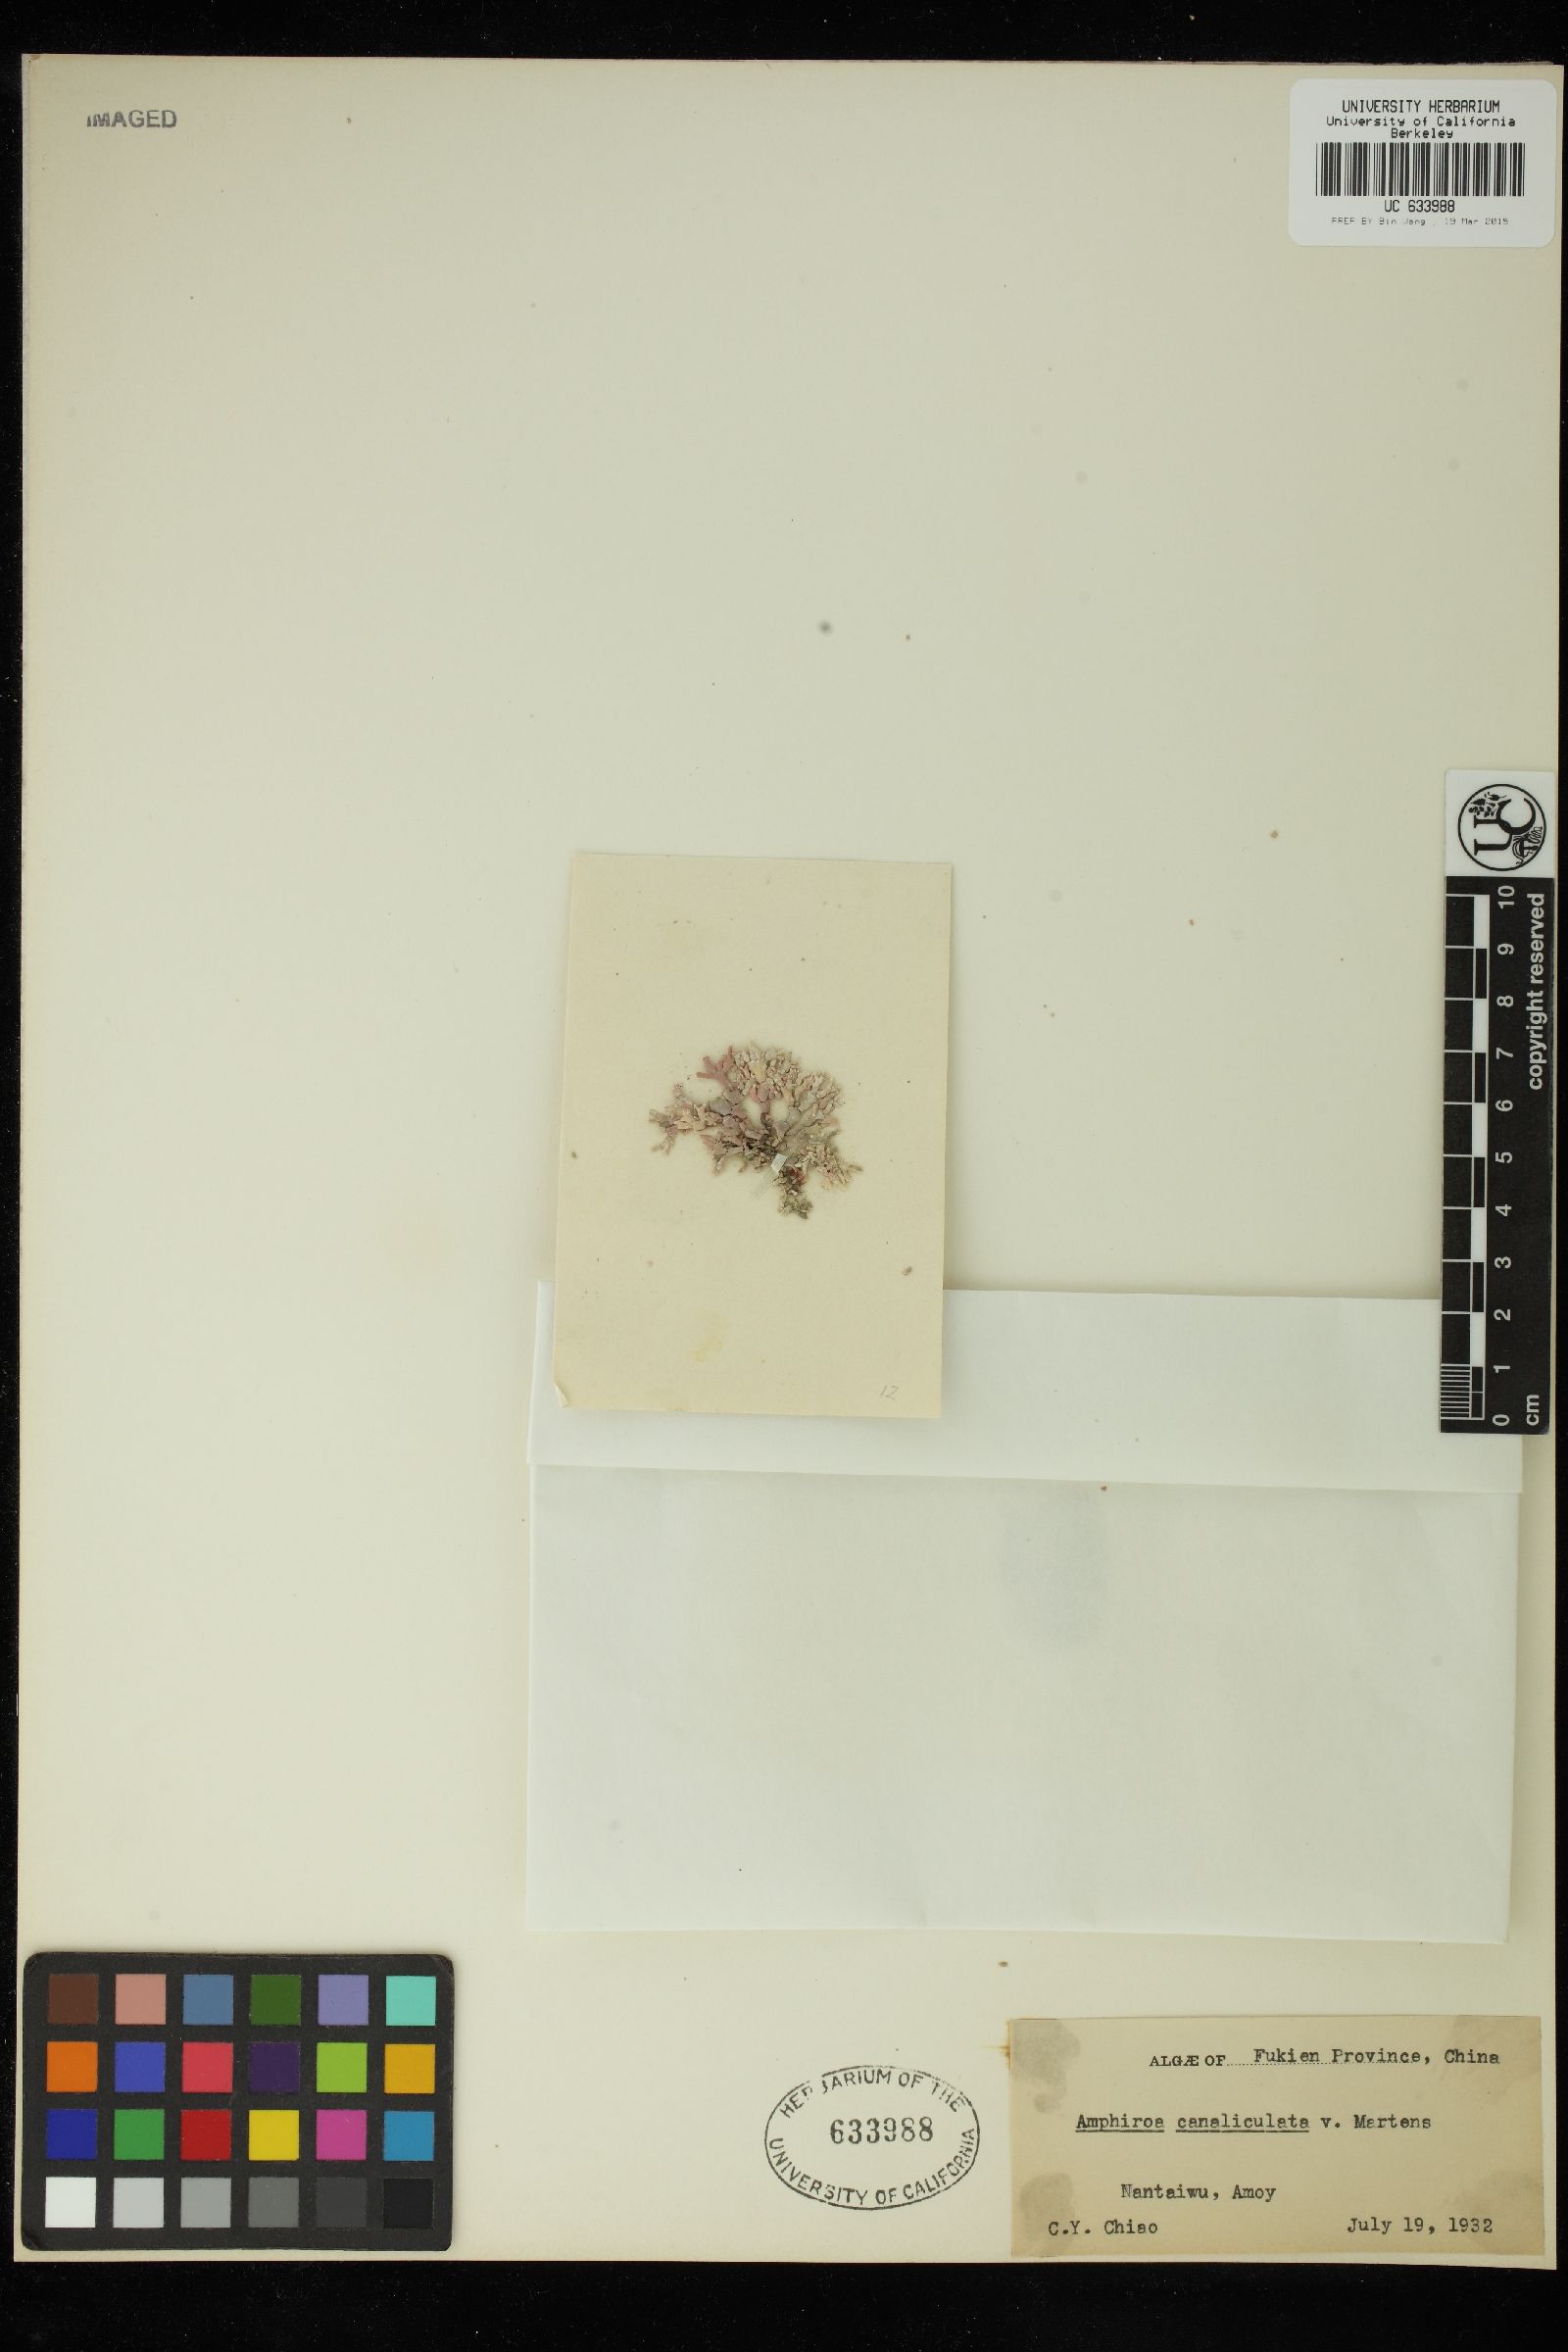 Amphiroa canaliculata image